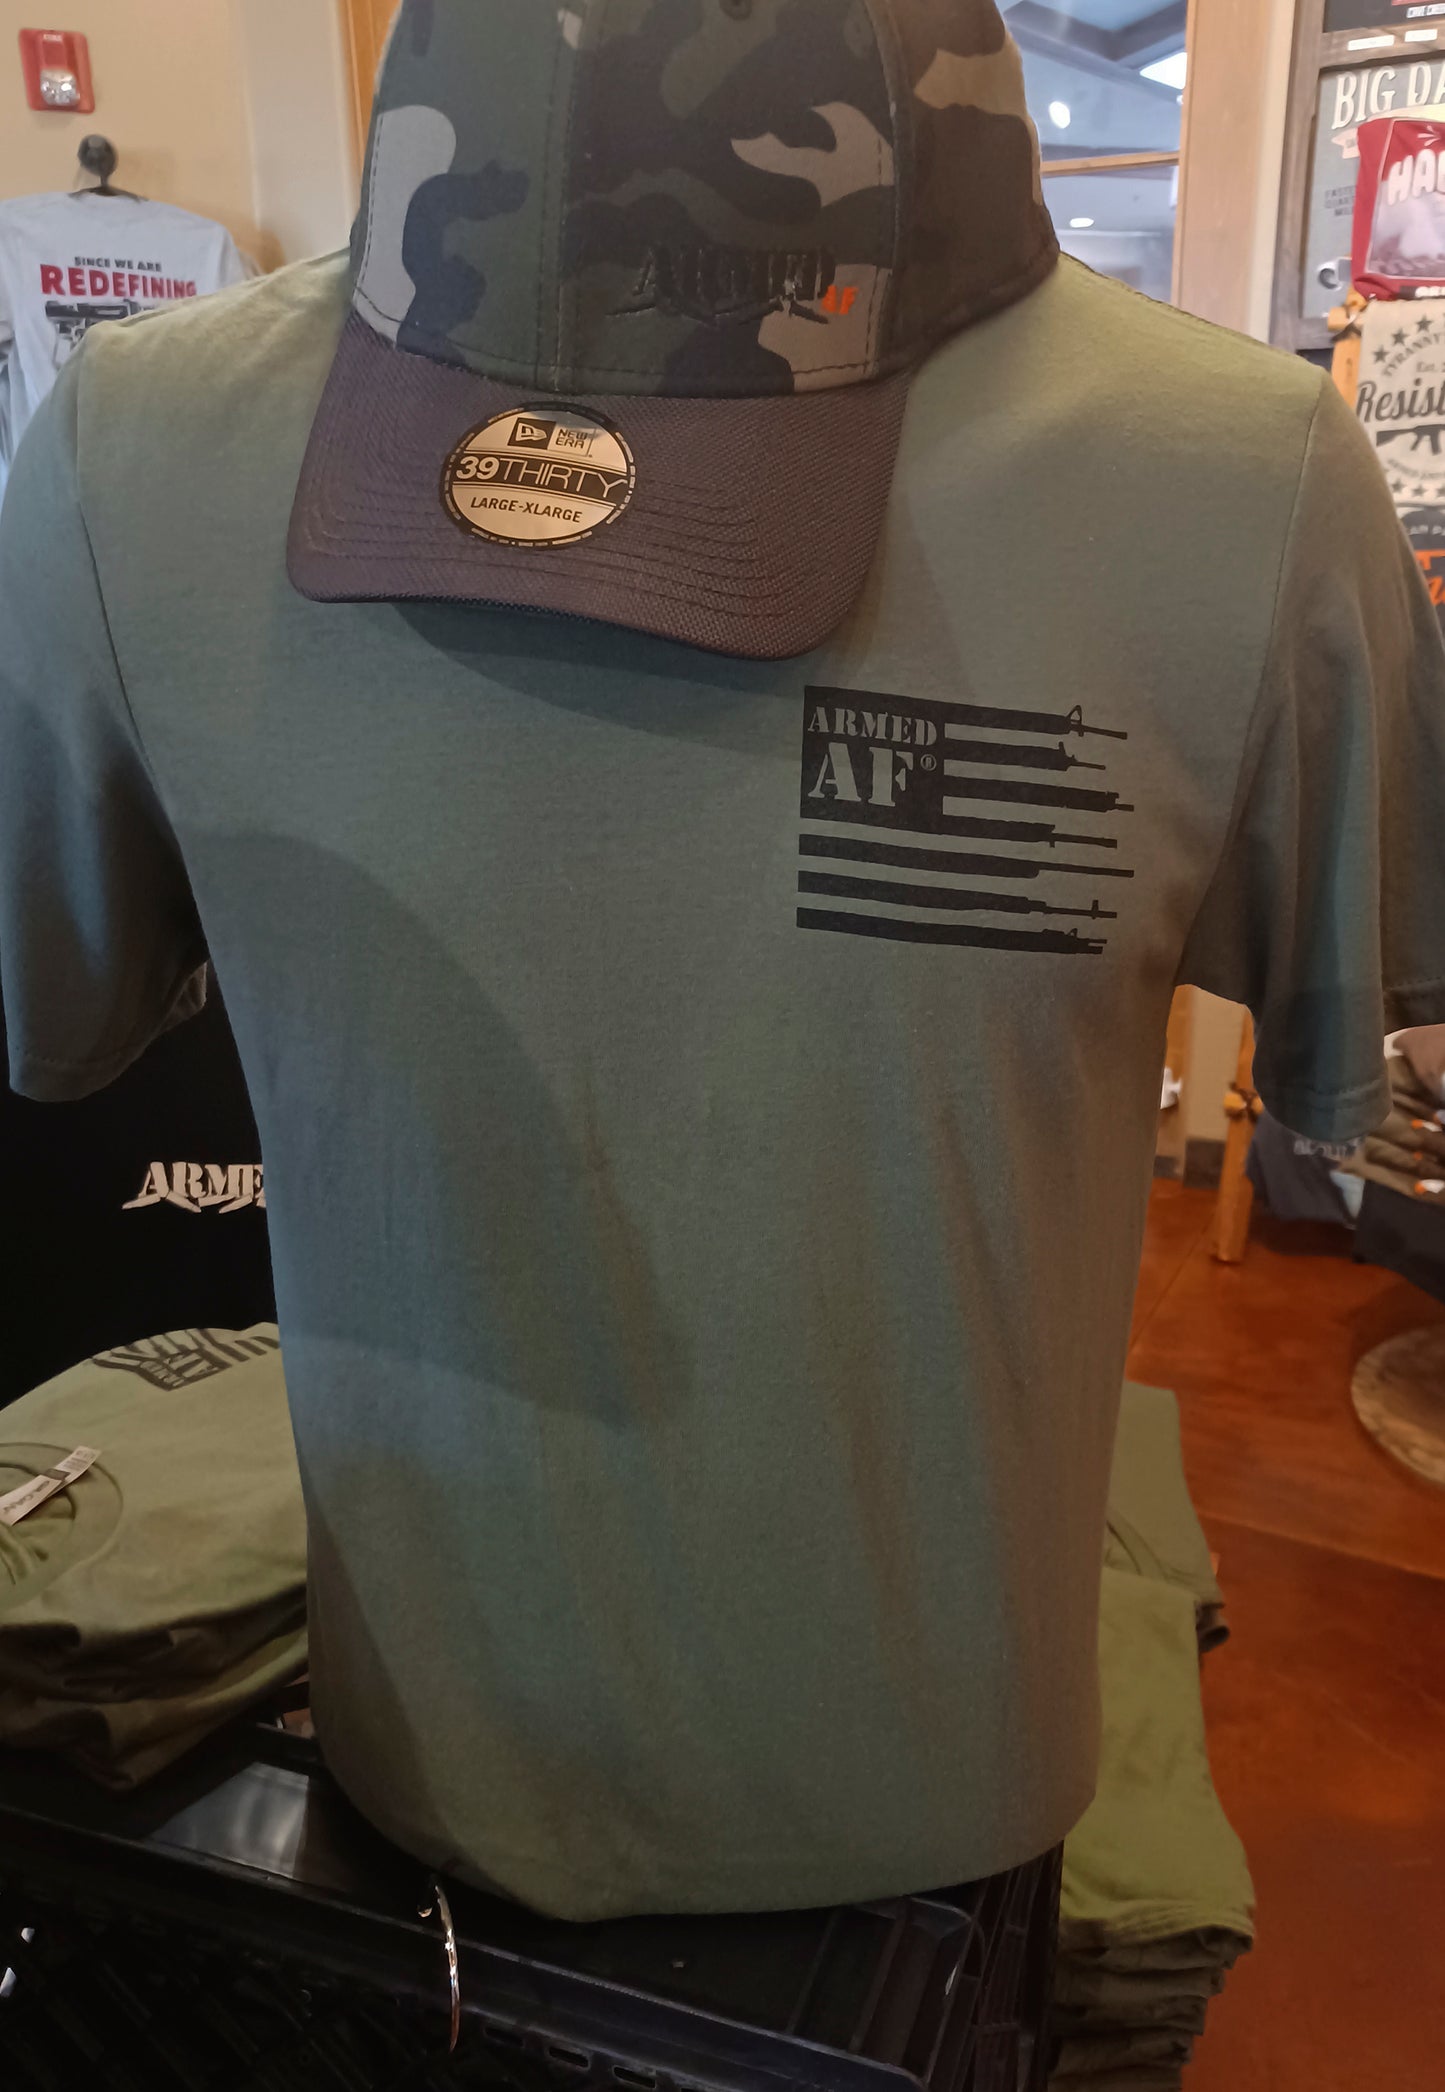 Gun flag tee shirt on display in store